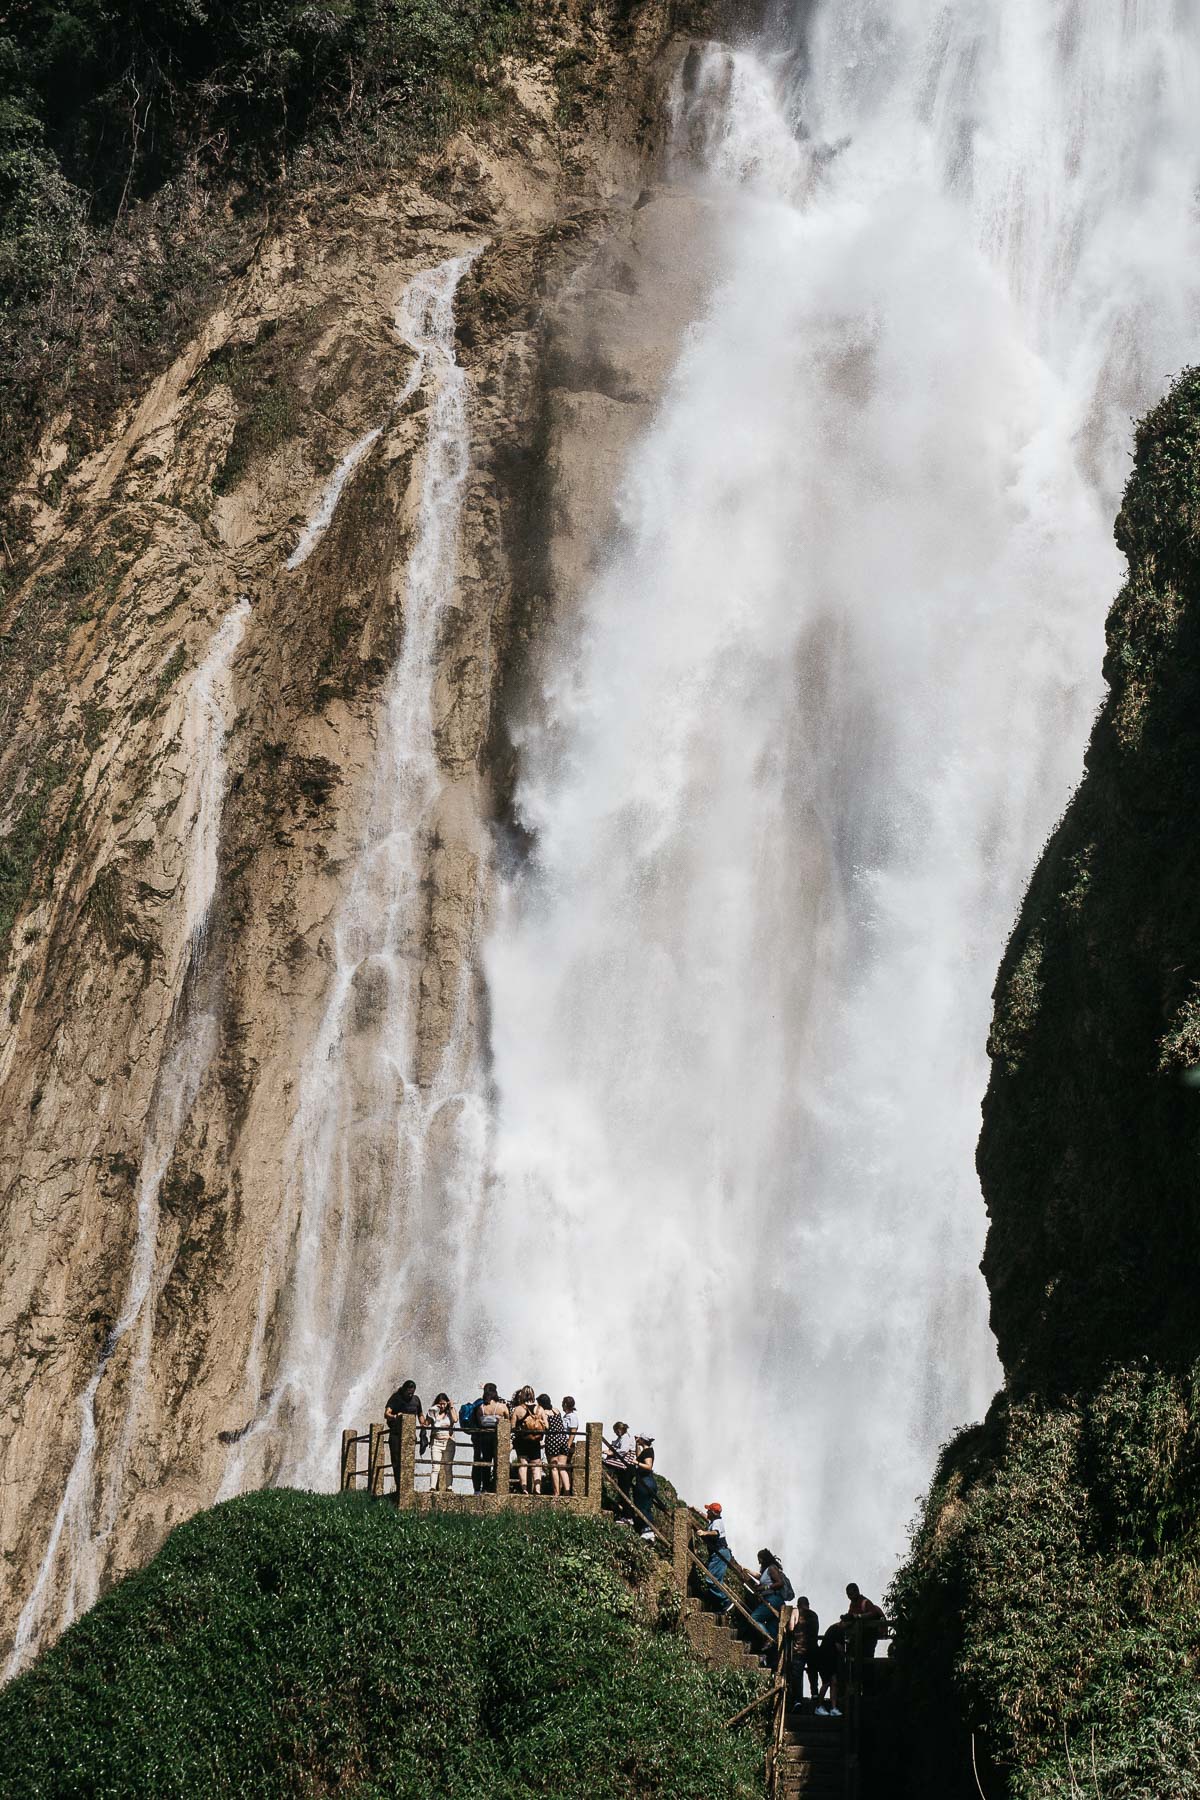 Waterfalls El Chiflon, Chiapas, one of the biggest waterfalls of the state